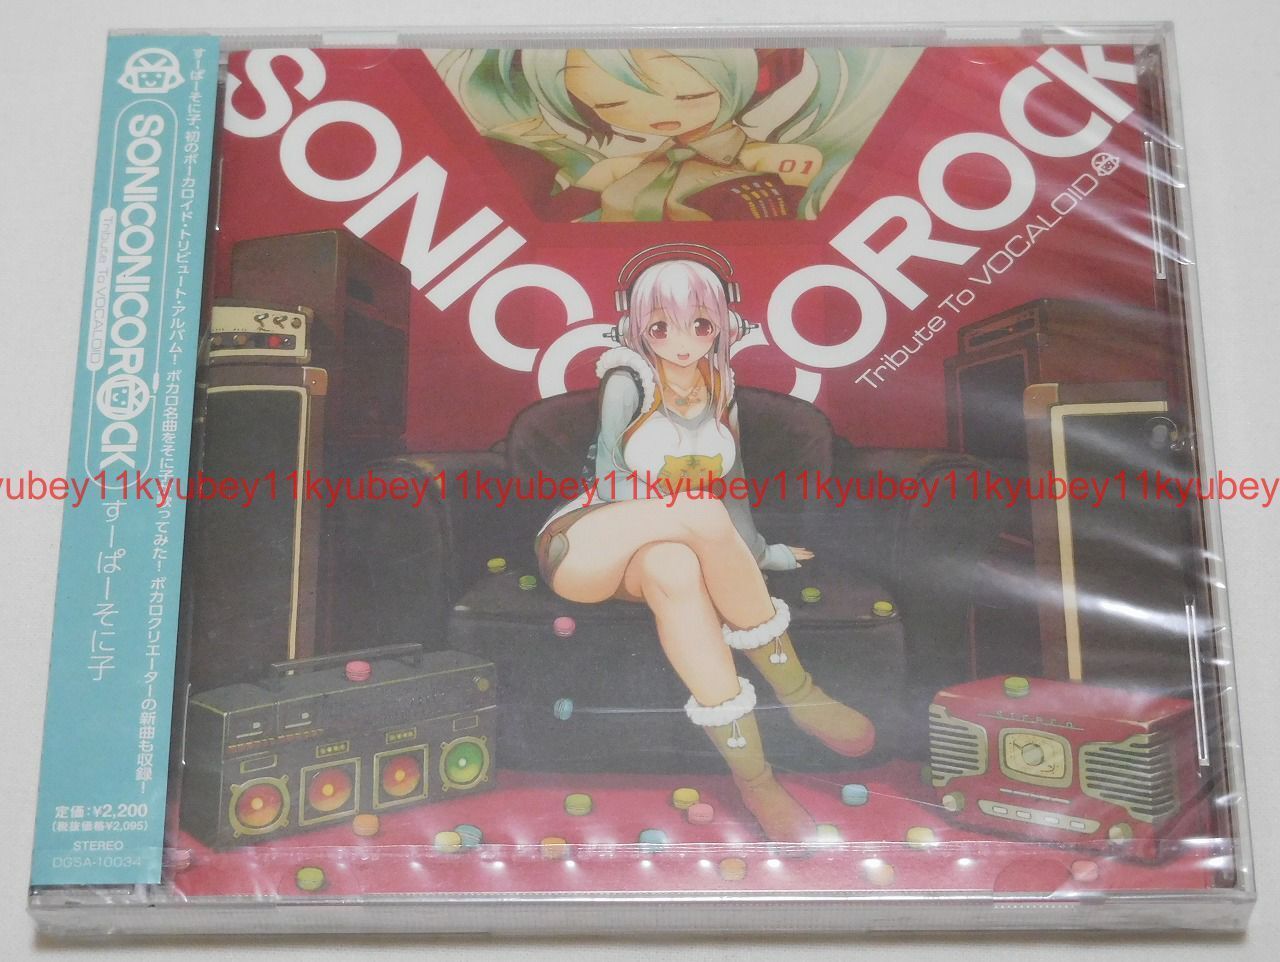 New Super Sonico SONICONICOROCK Tribute To VOCALOID CD Japan F/S DGSA-10034